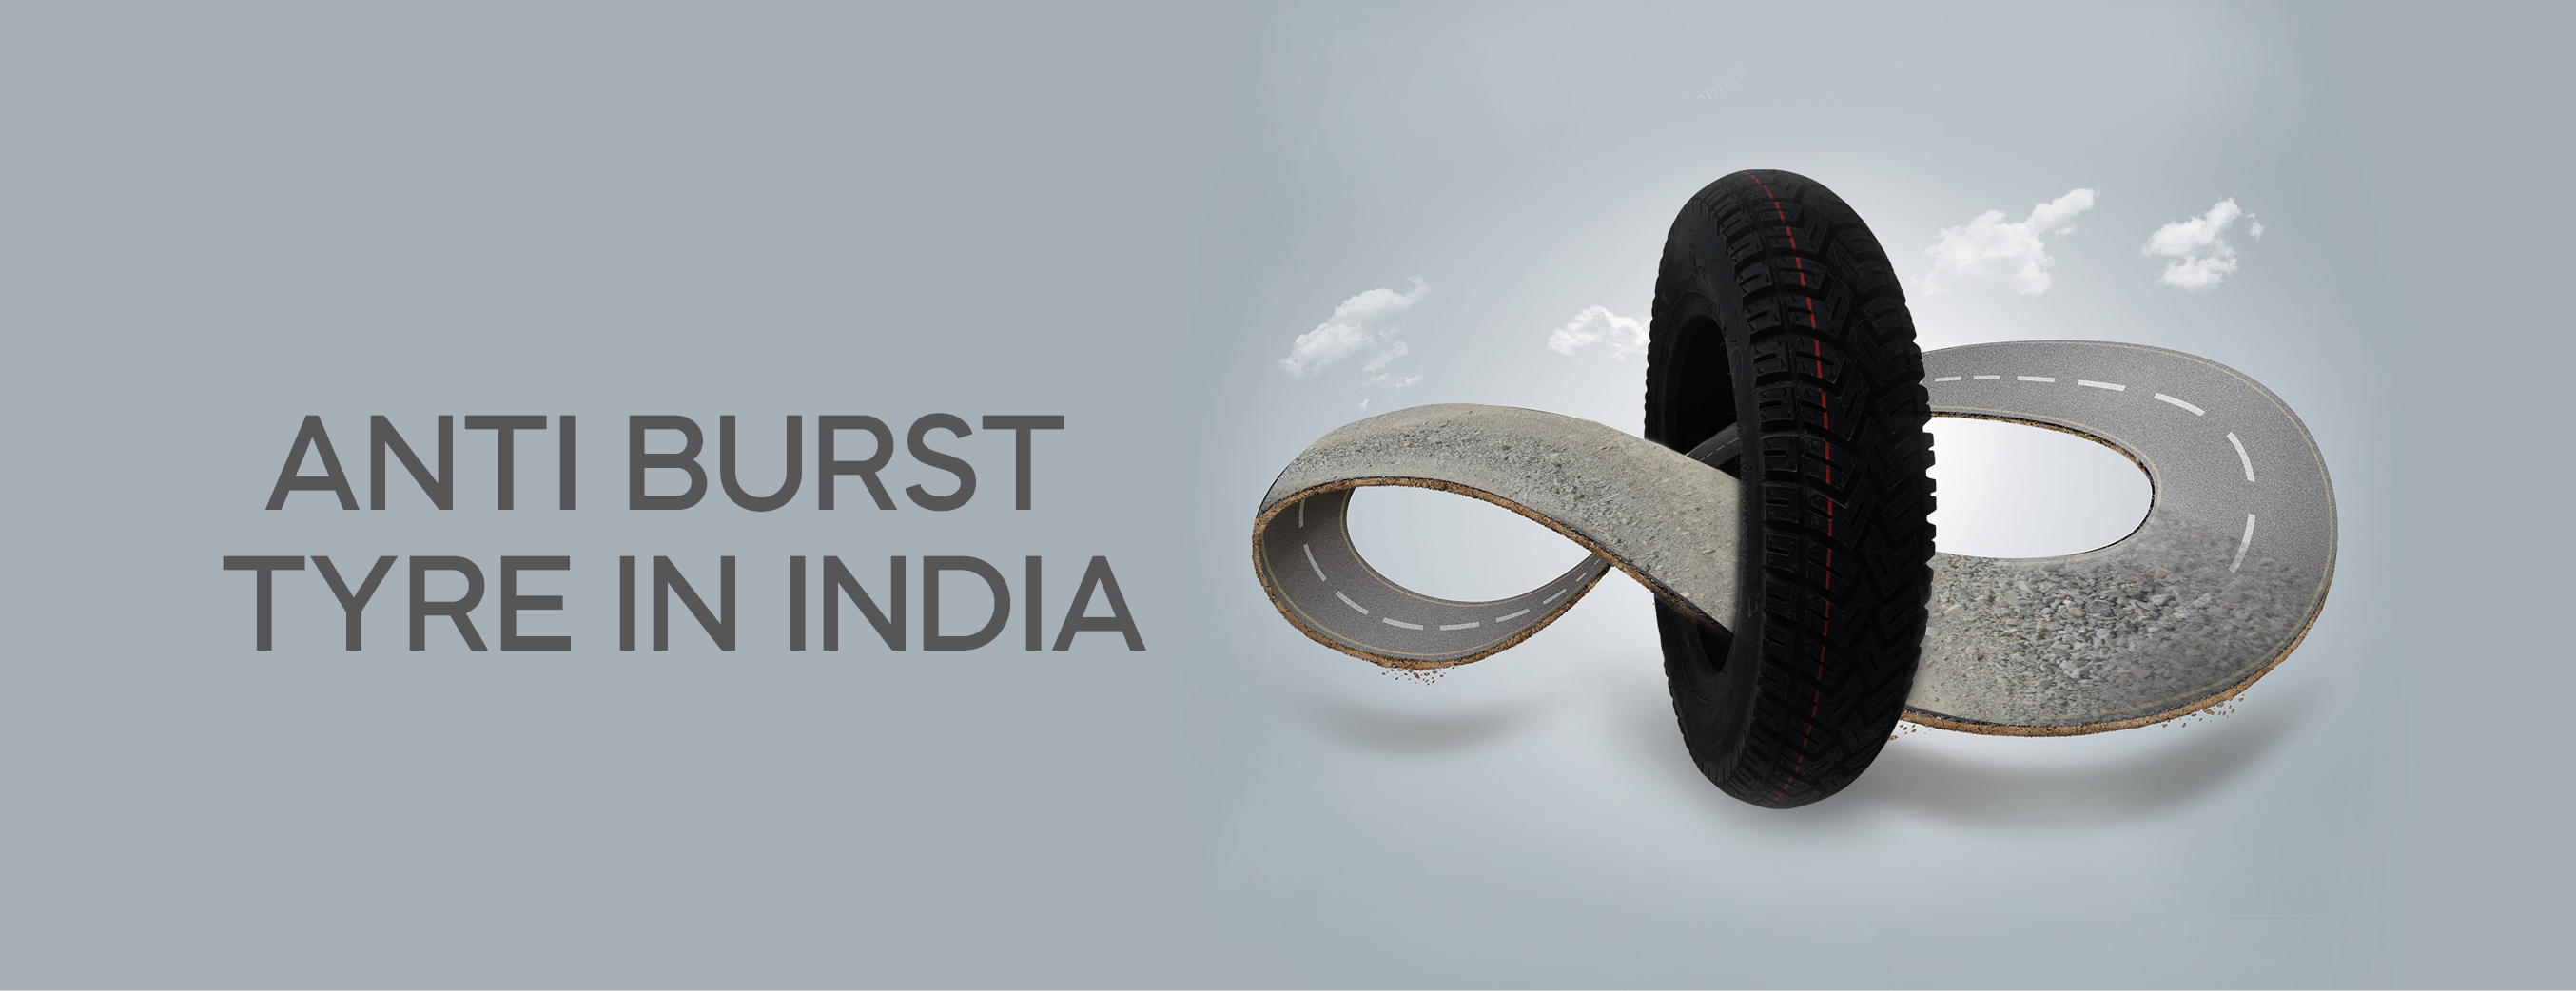 Anti Burst Tyre in india 